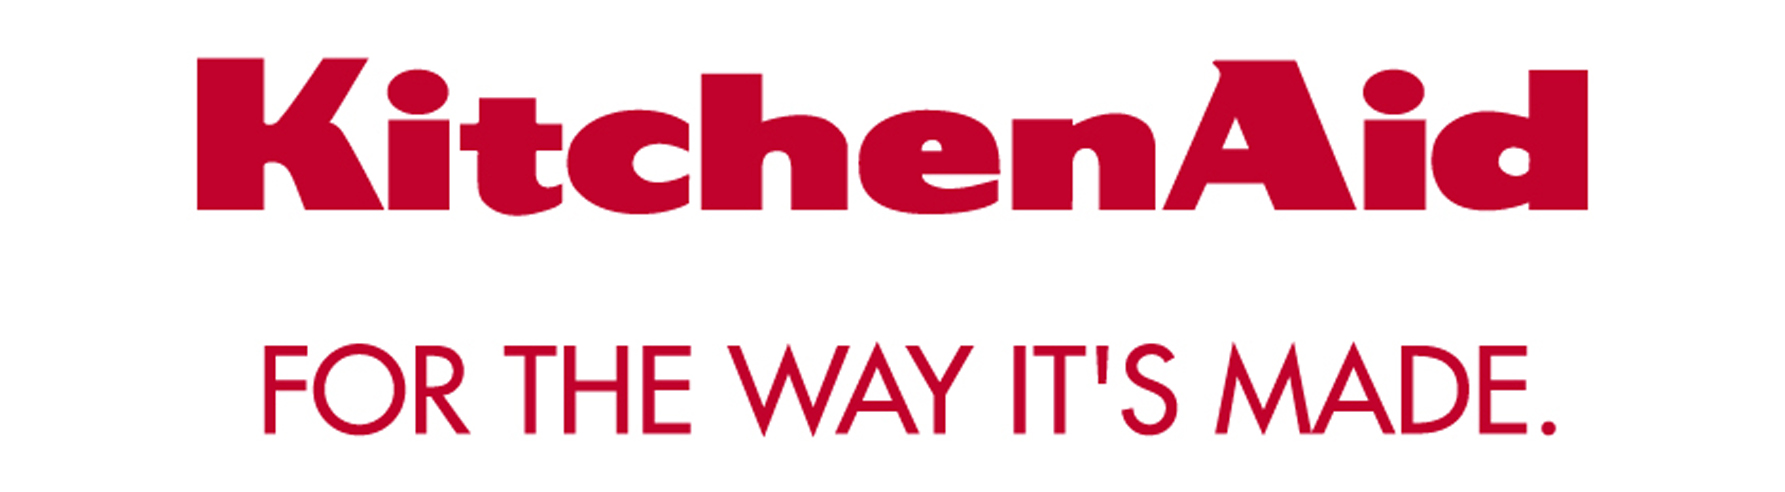 Logo KitchenAid